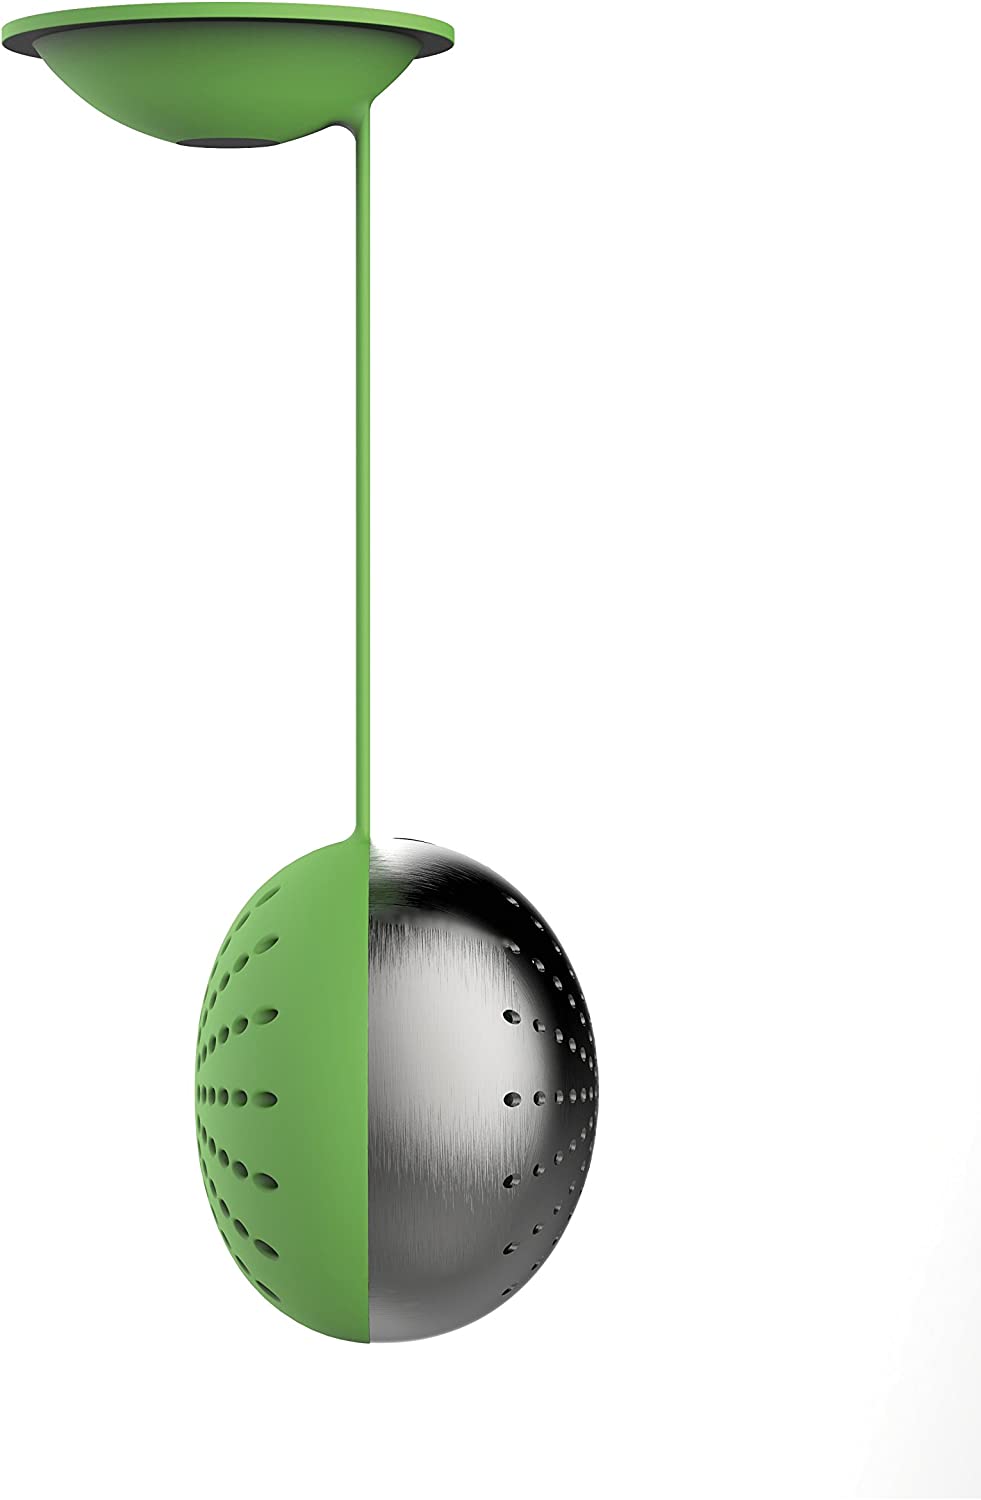 Magnetic Tea Infuser Ball